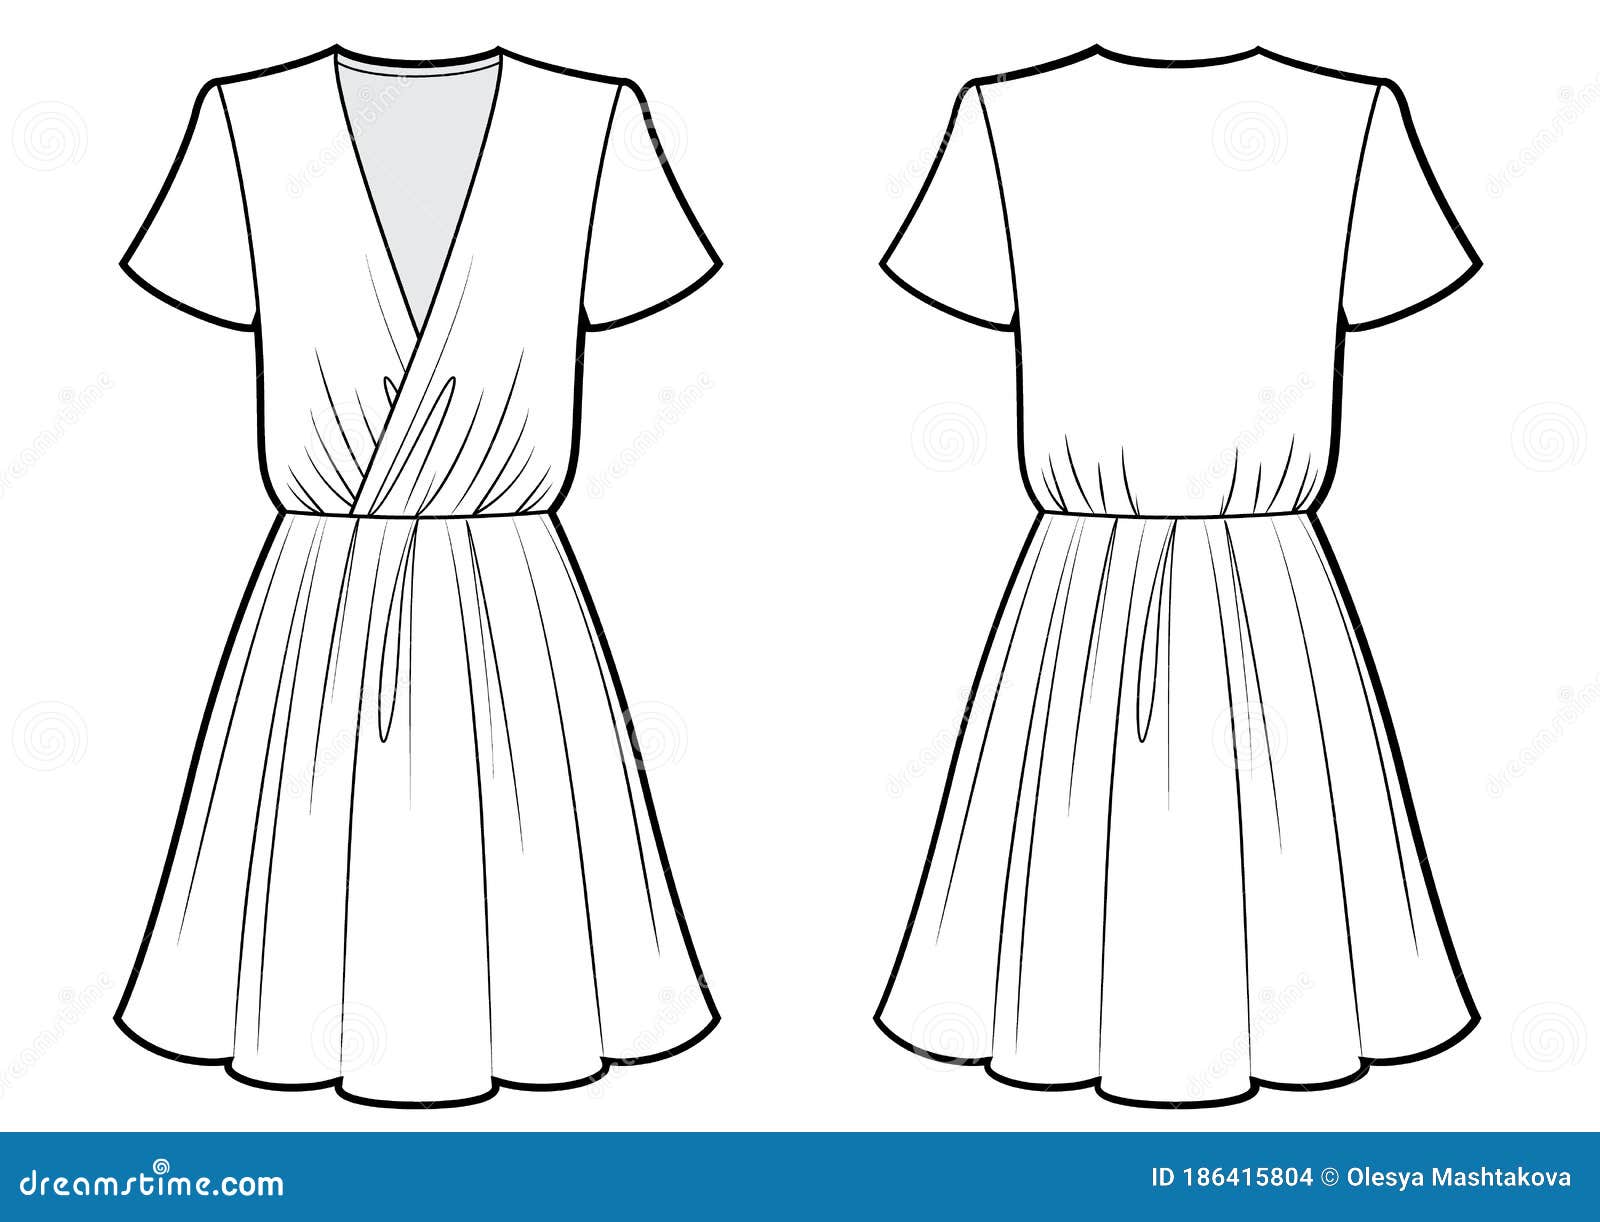 Technical Drawing Dress